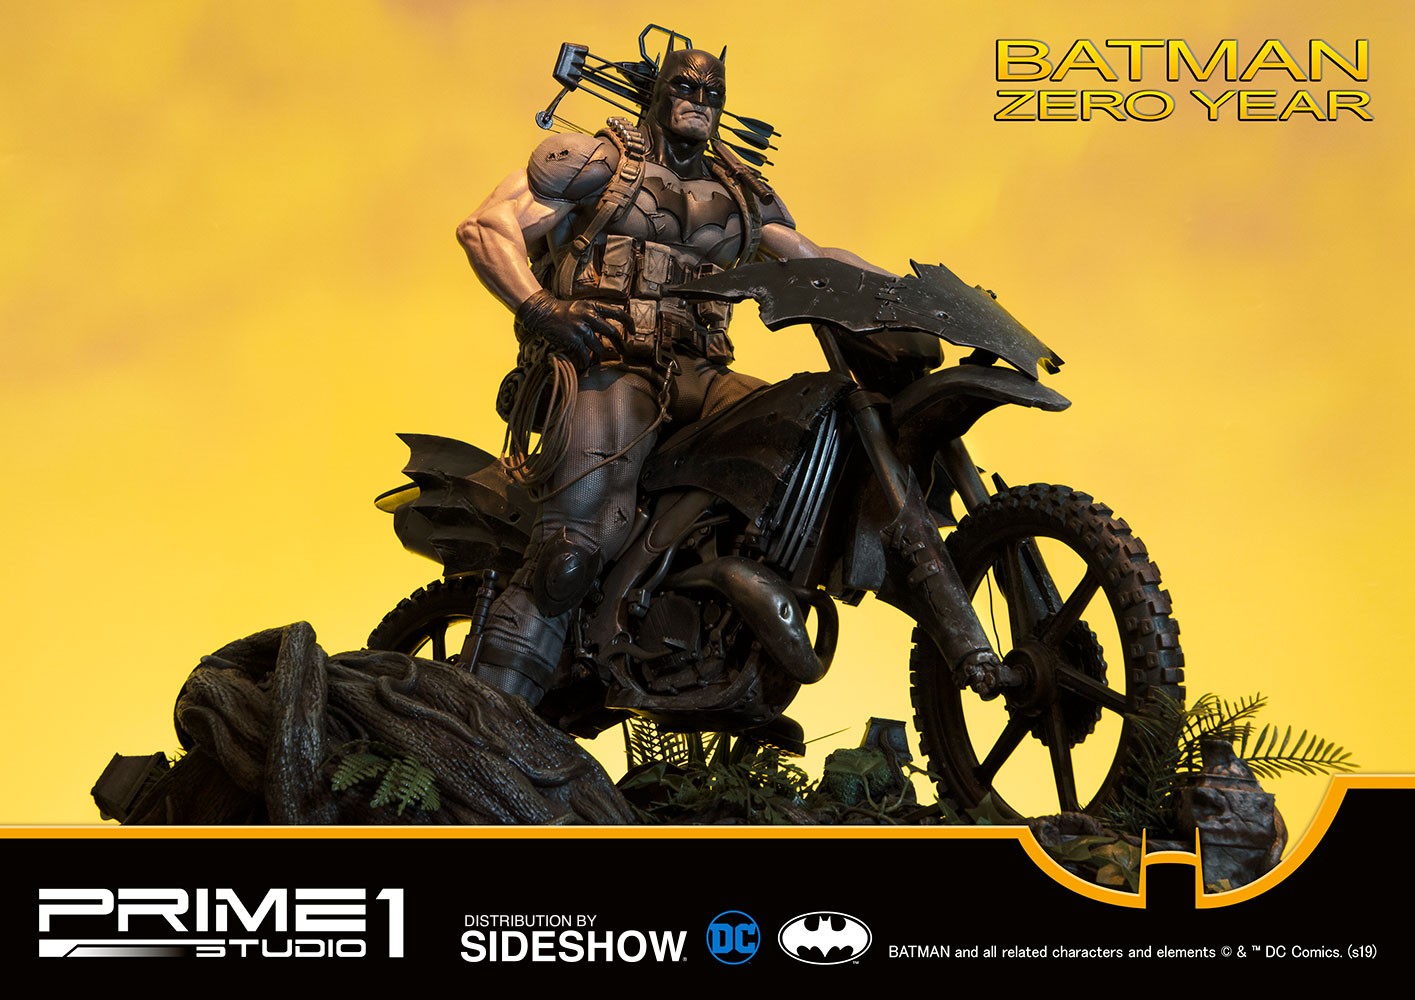 Batman Zero Year Exclusive Edition (Prototype Shown) View 16